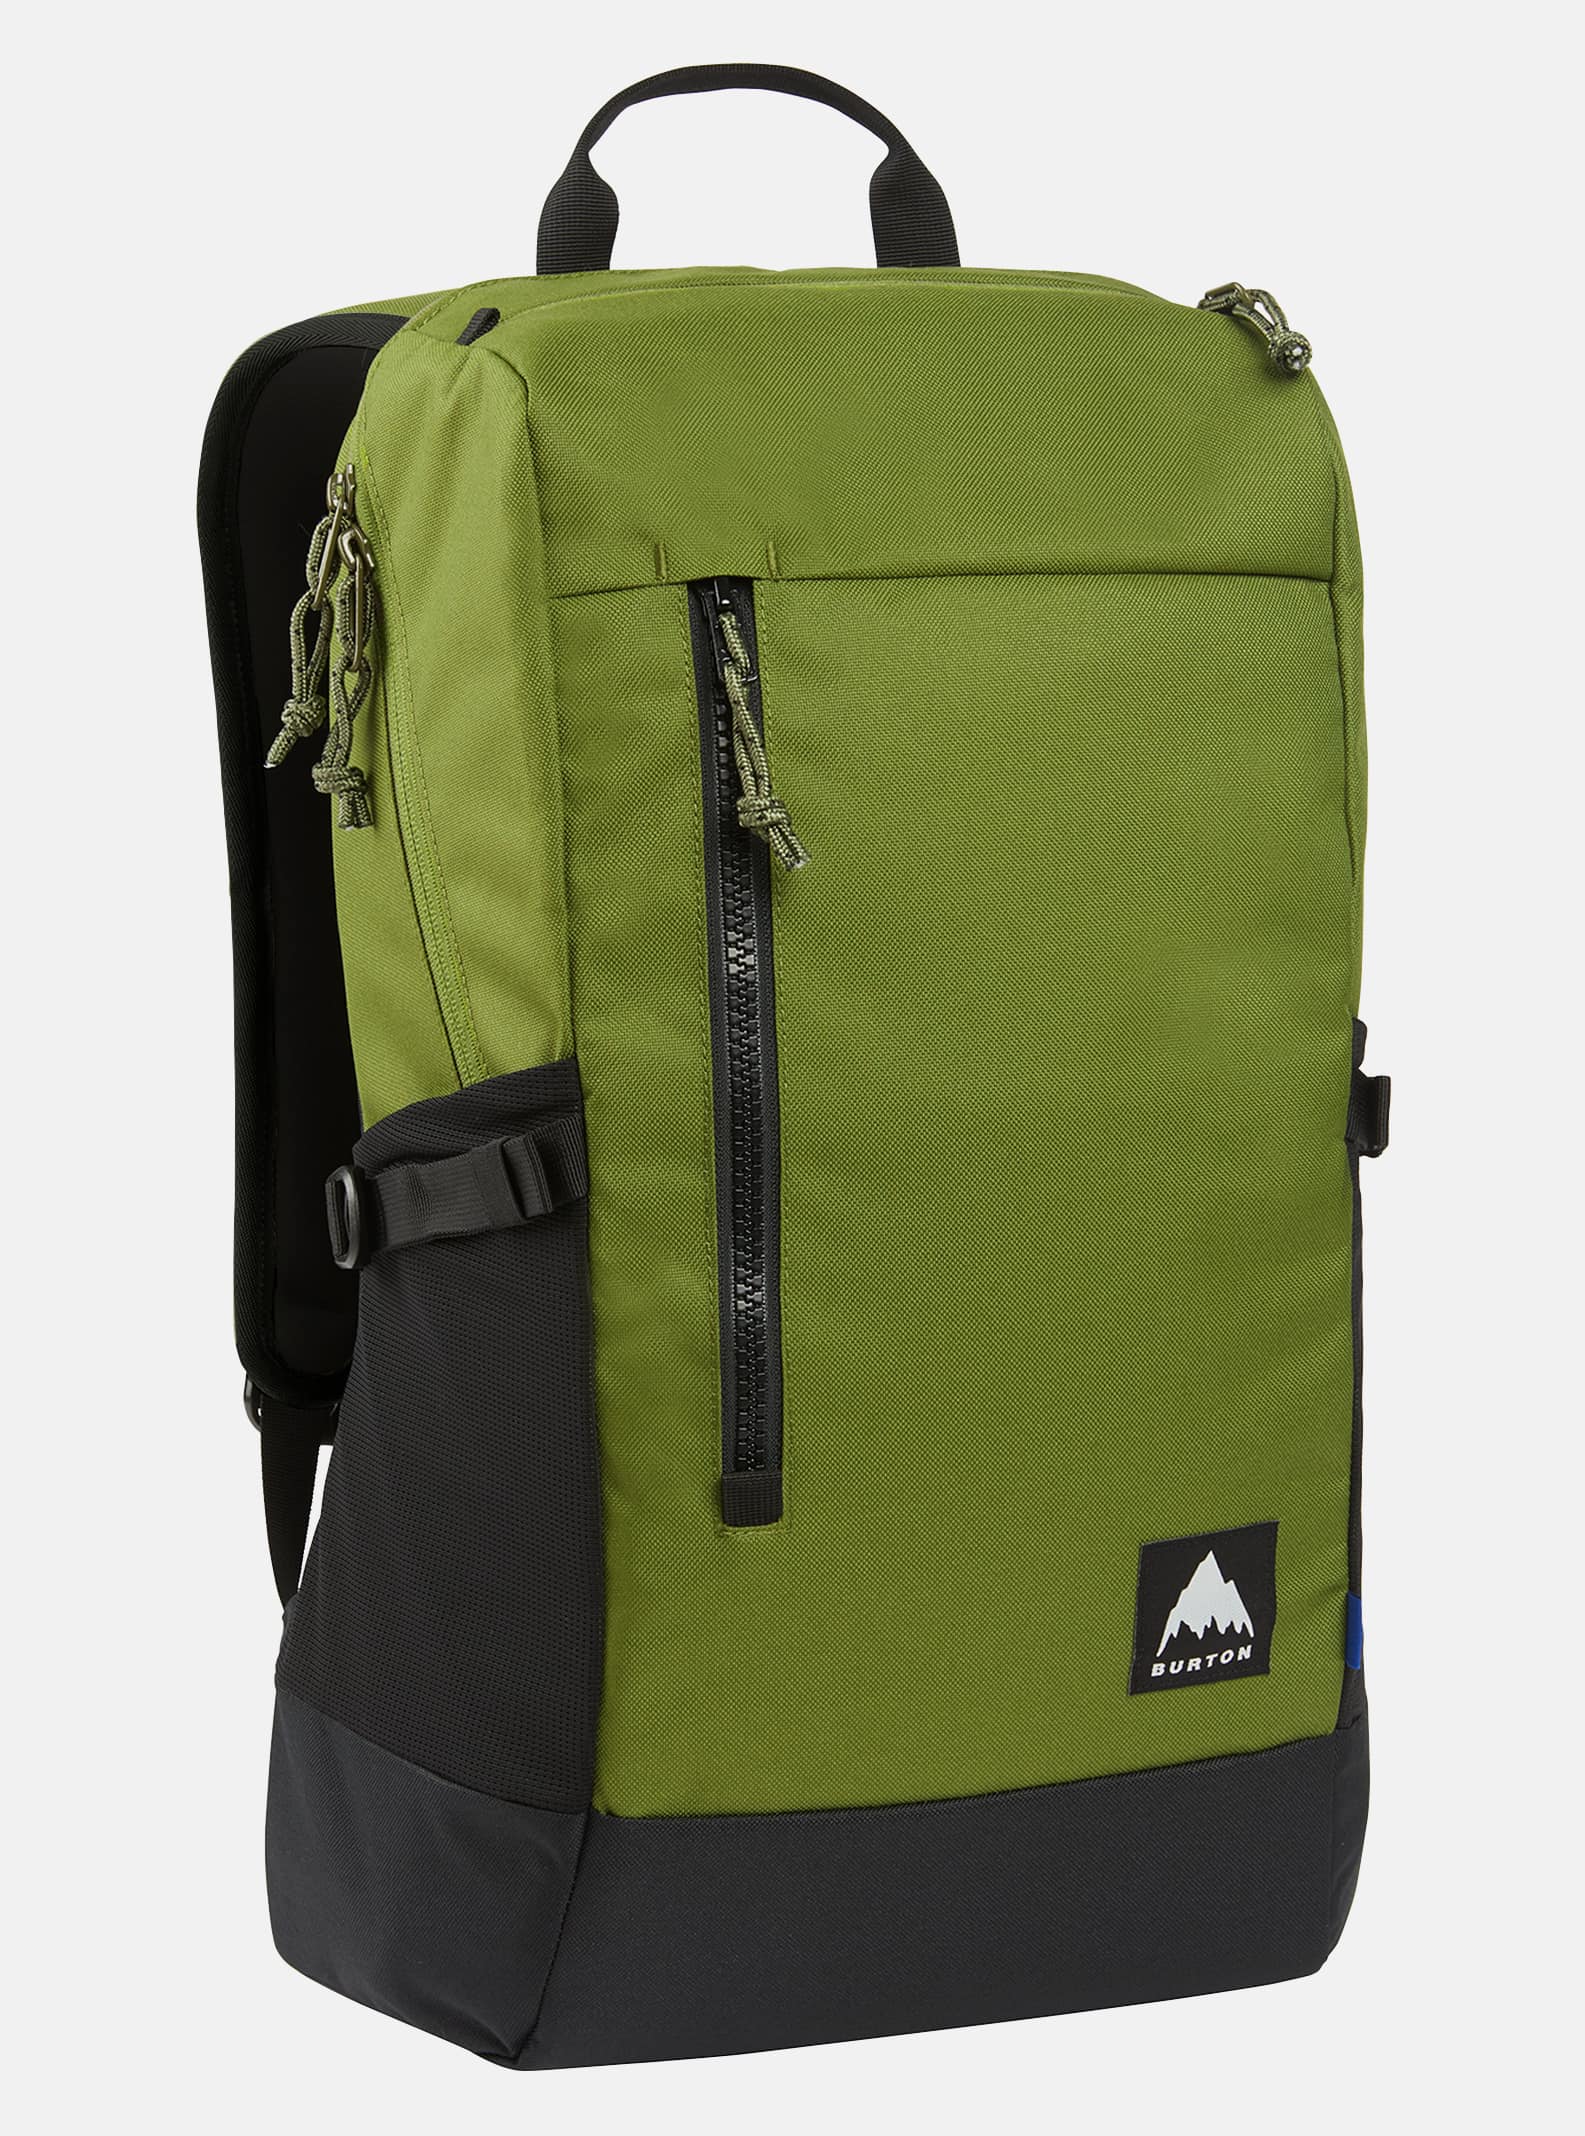 Backpacks | Burton Snowboards AU